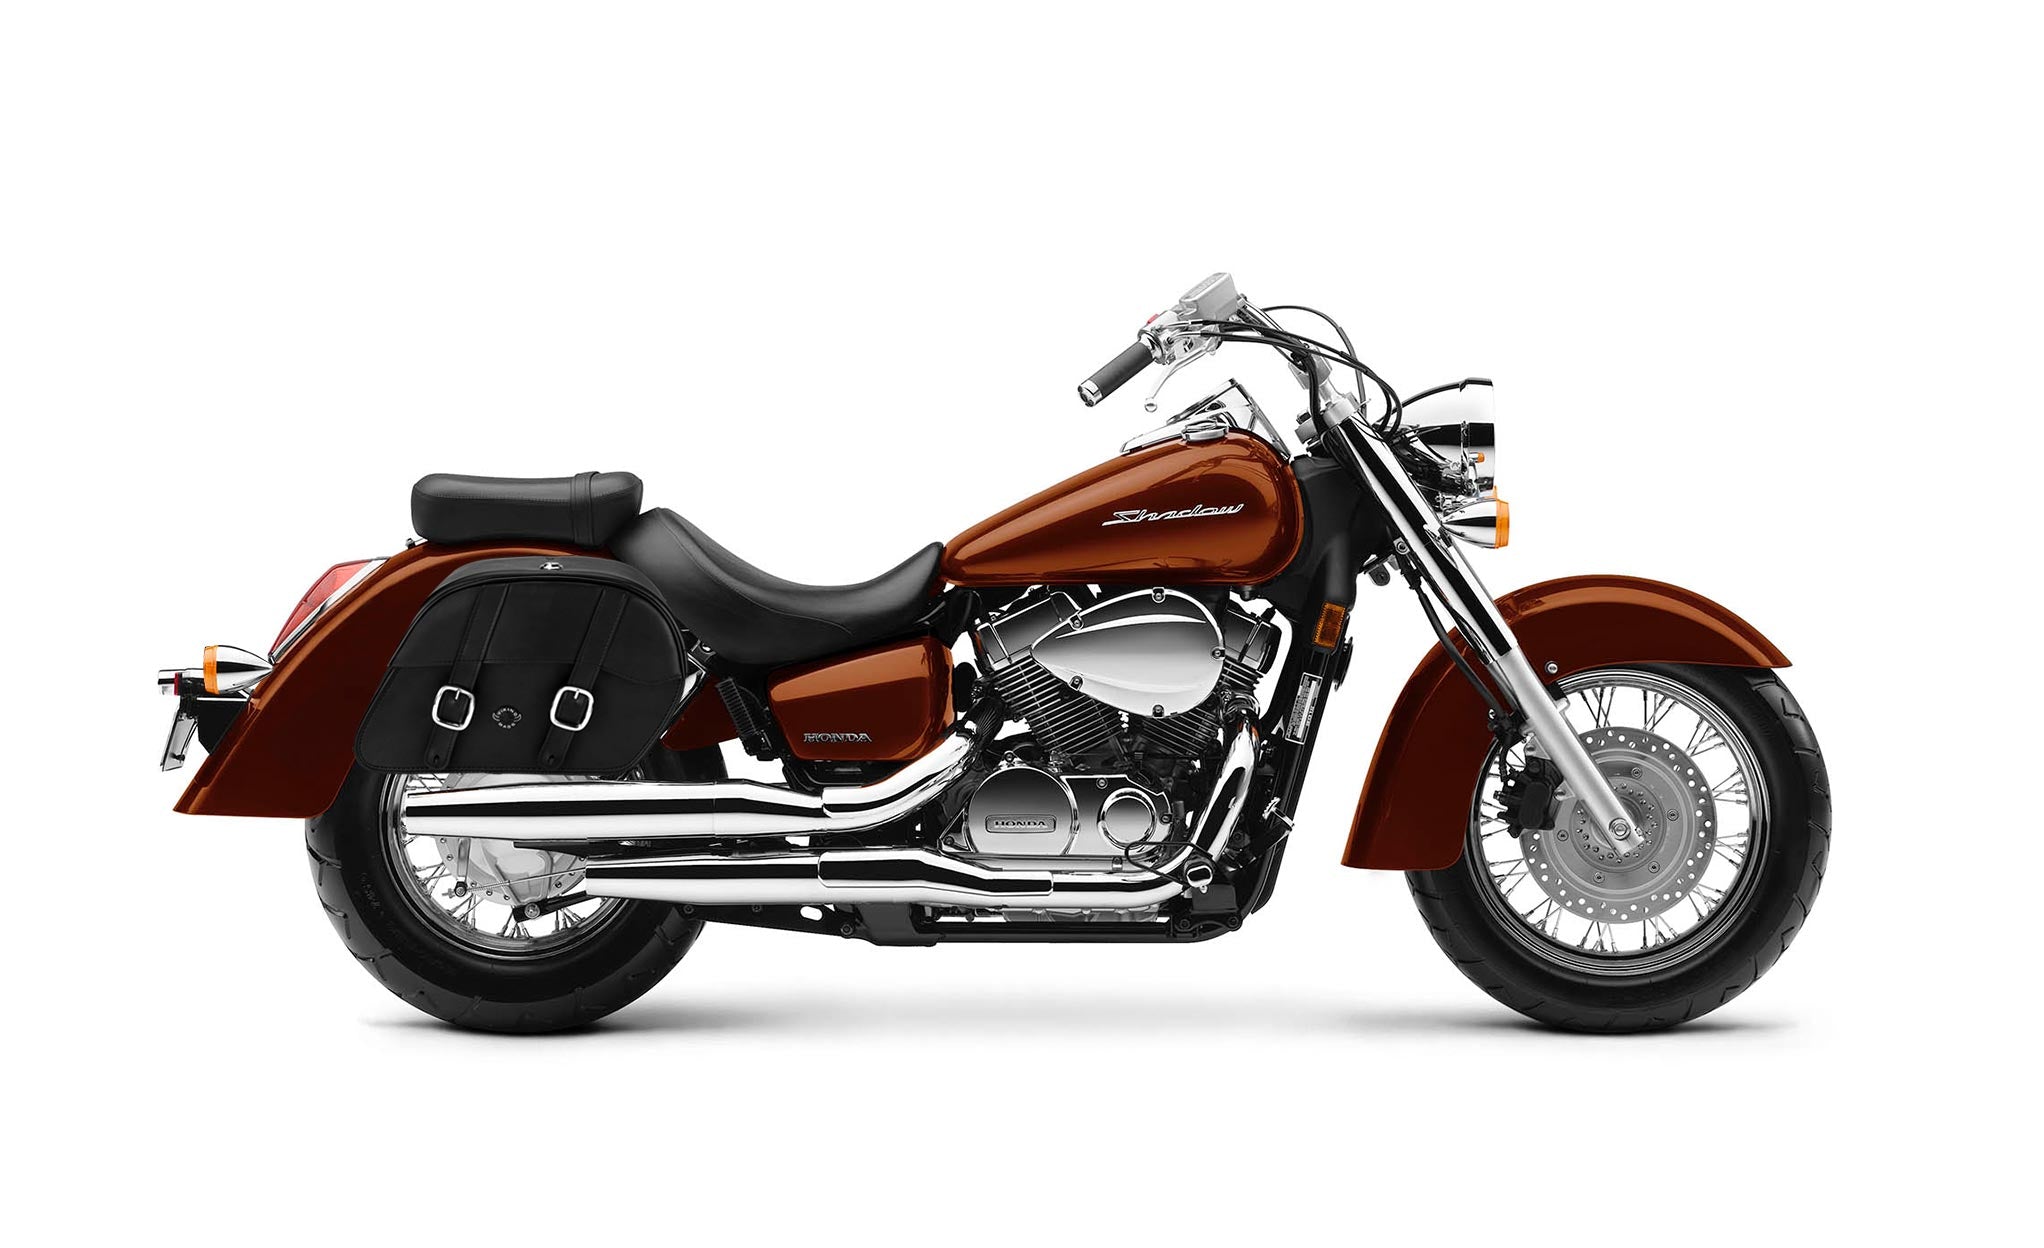 Viking Skarner Medium Lockable Honda Shadow 1100 Aero Leather Motorcycle Saddlebags on Bike Photo @expand